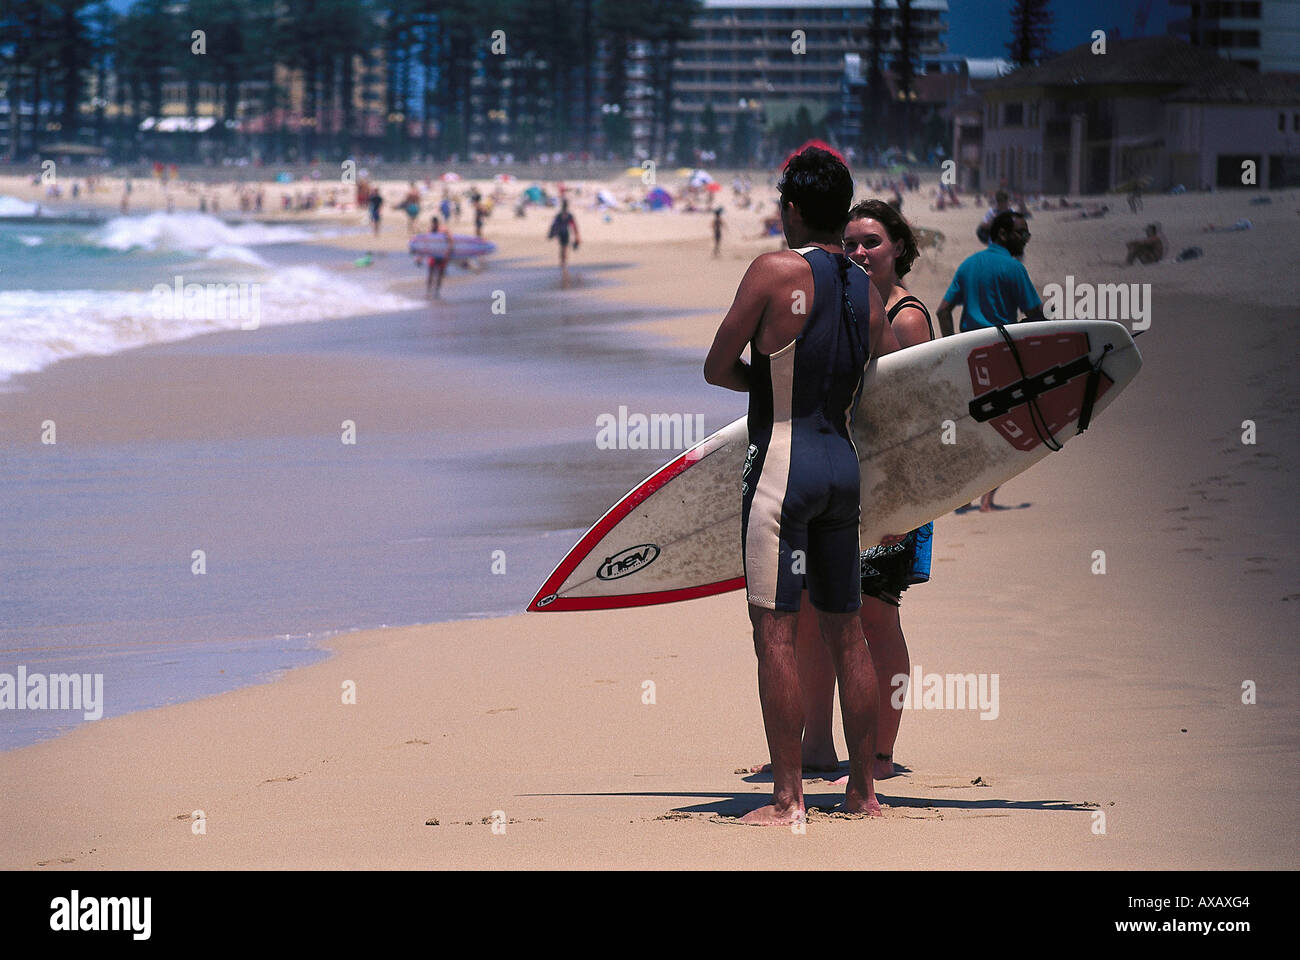 Surfer am Strand, Manly Beach, NSW Australien Stock Photo